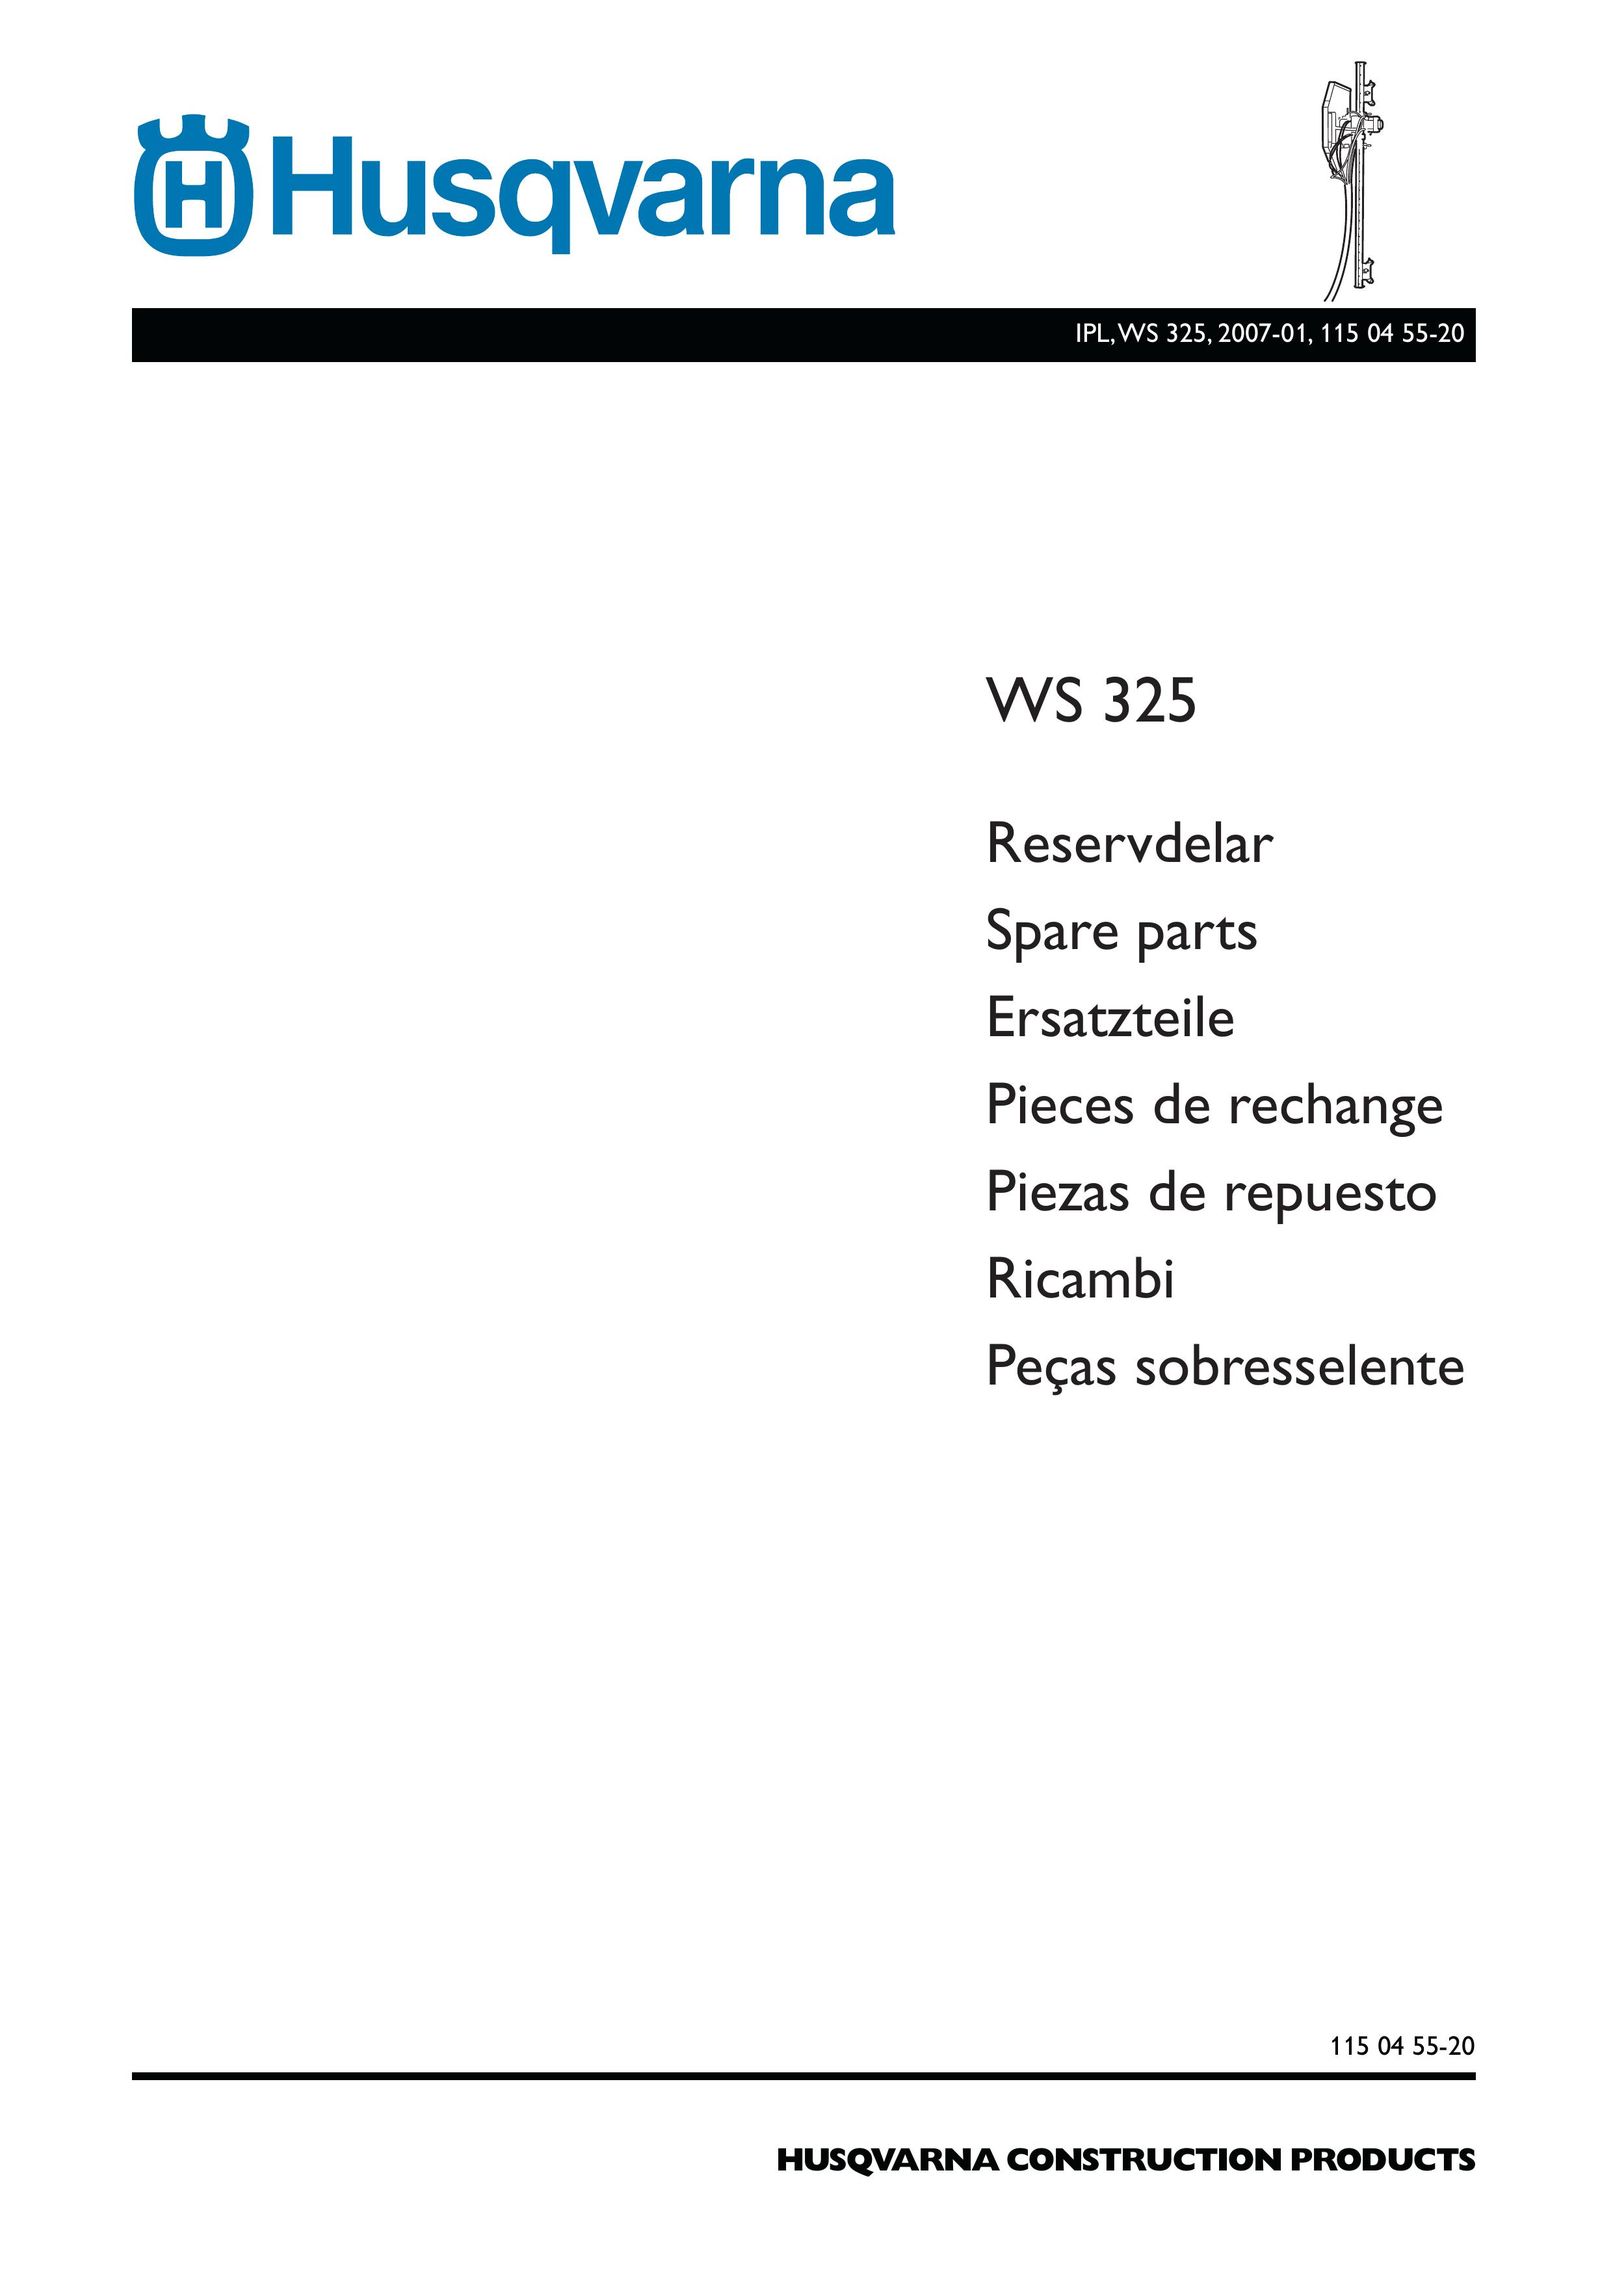 Husqvarna WS 325 Saw User Manual